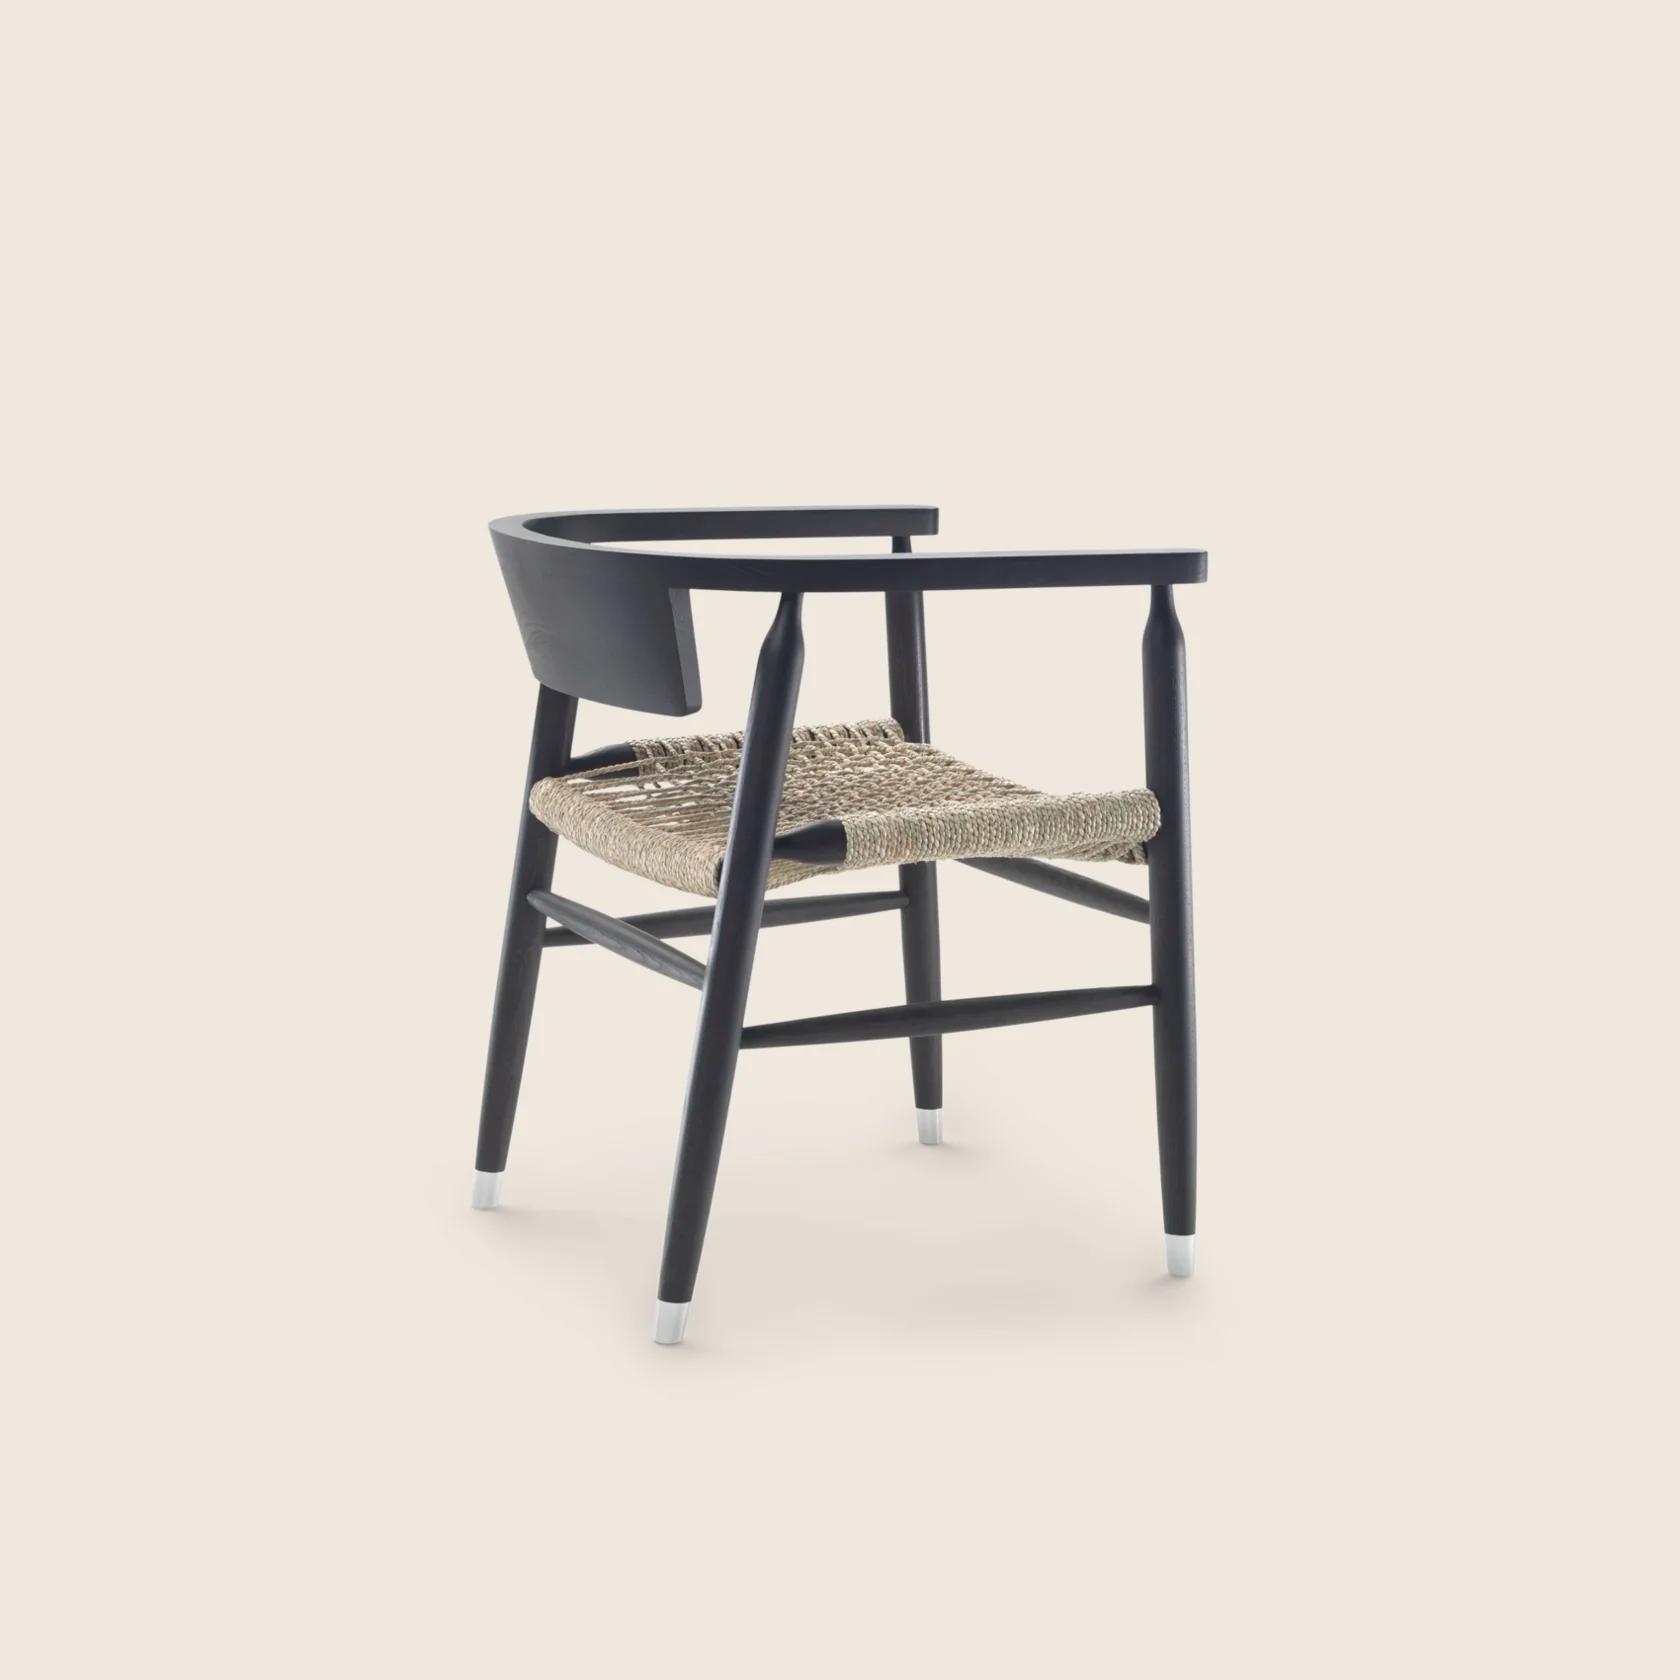 Design - Made Dining Flexform S.H. in | | DORIS chairs/Chairs Italy DORIS